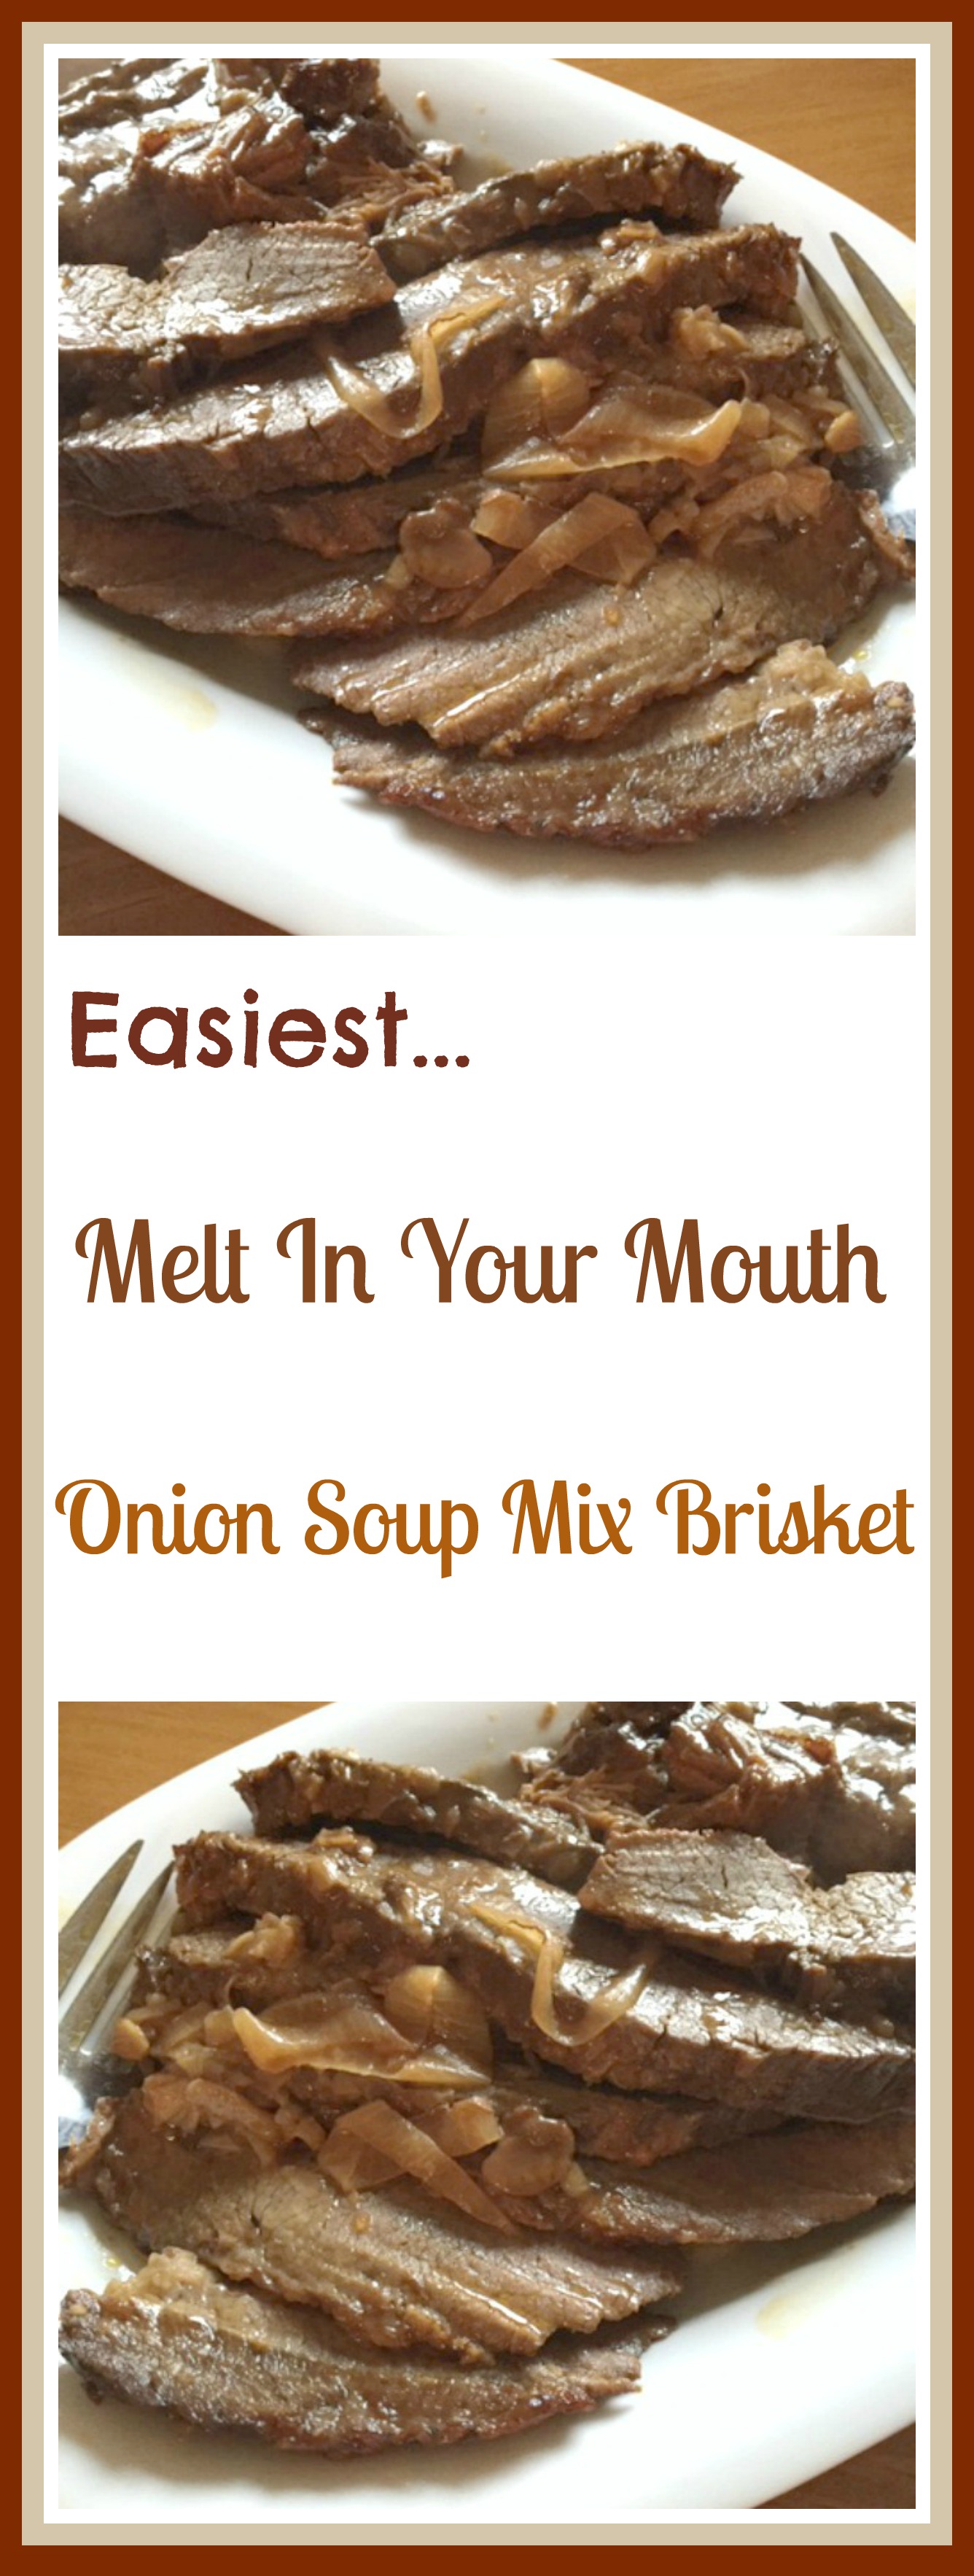 Goodman's Onion Soup Mix is a great alternative to Lipton's soup